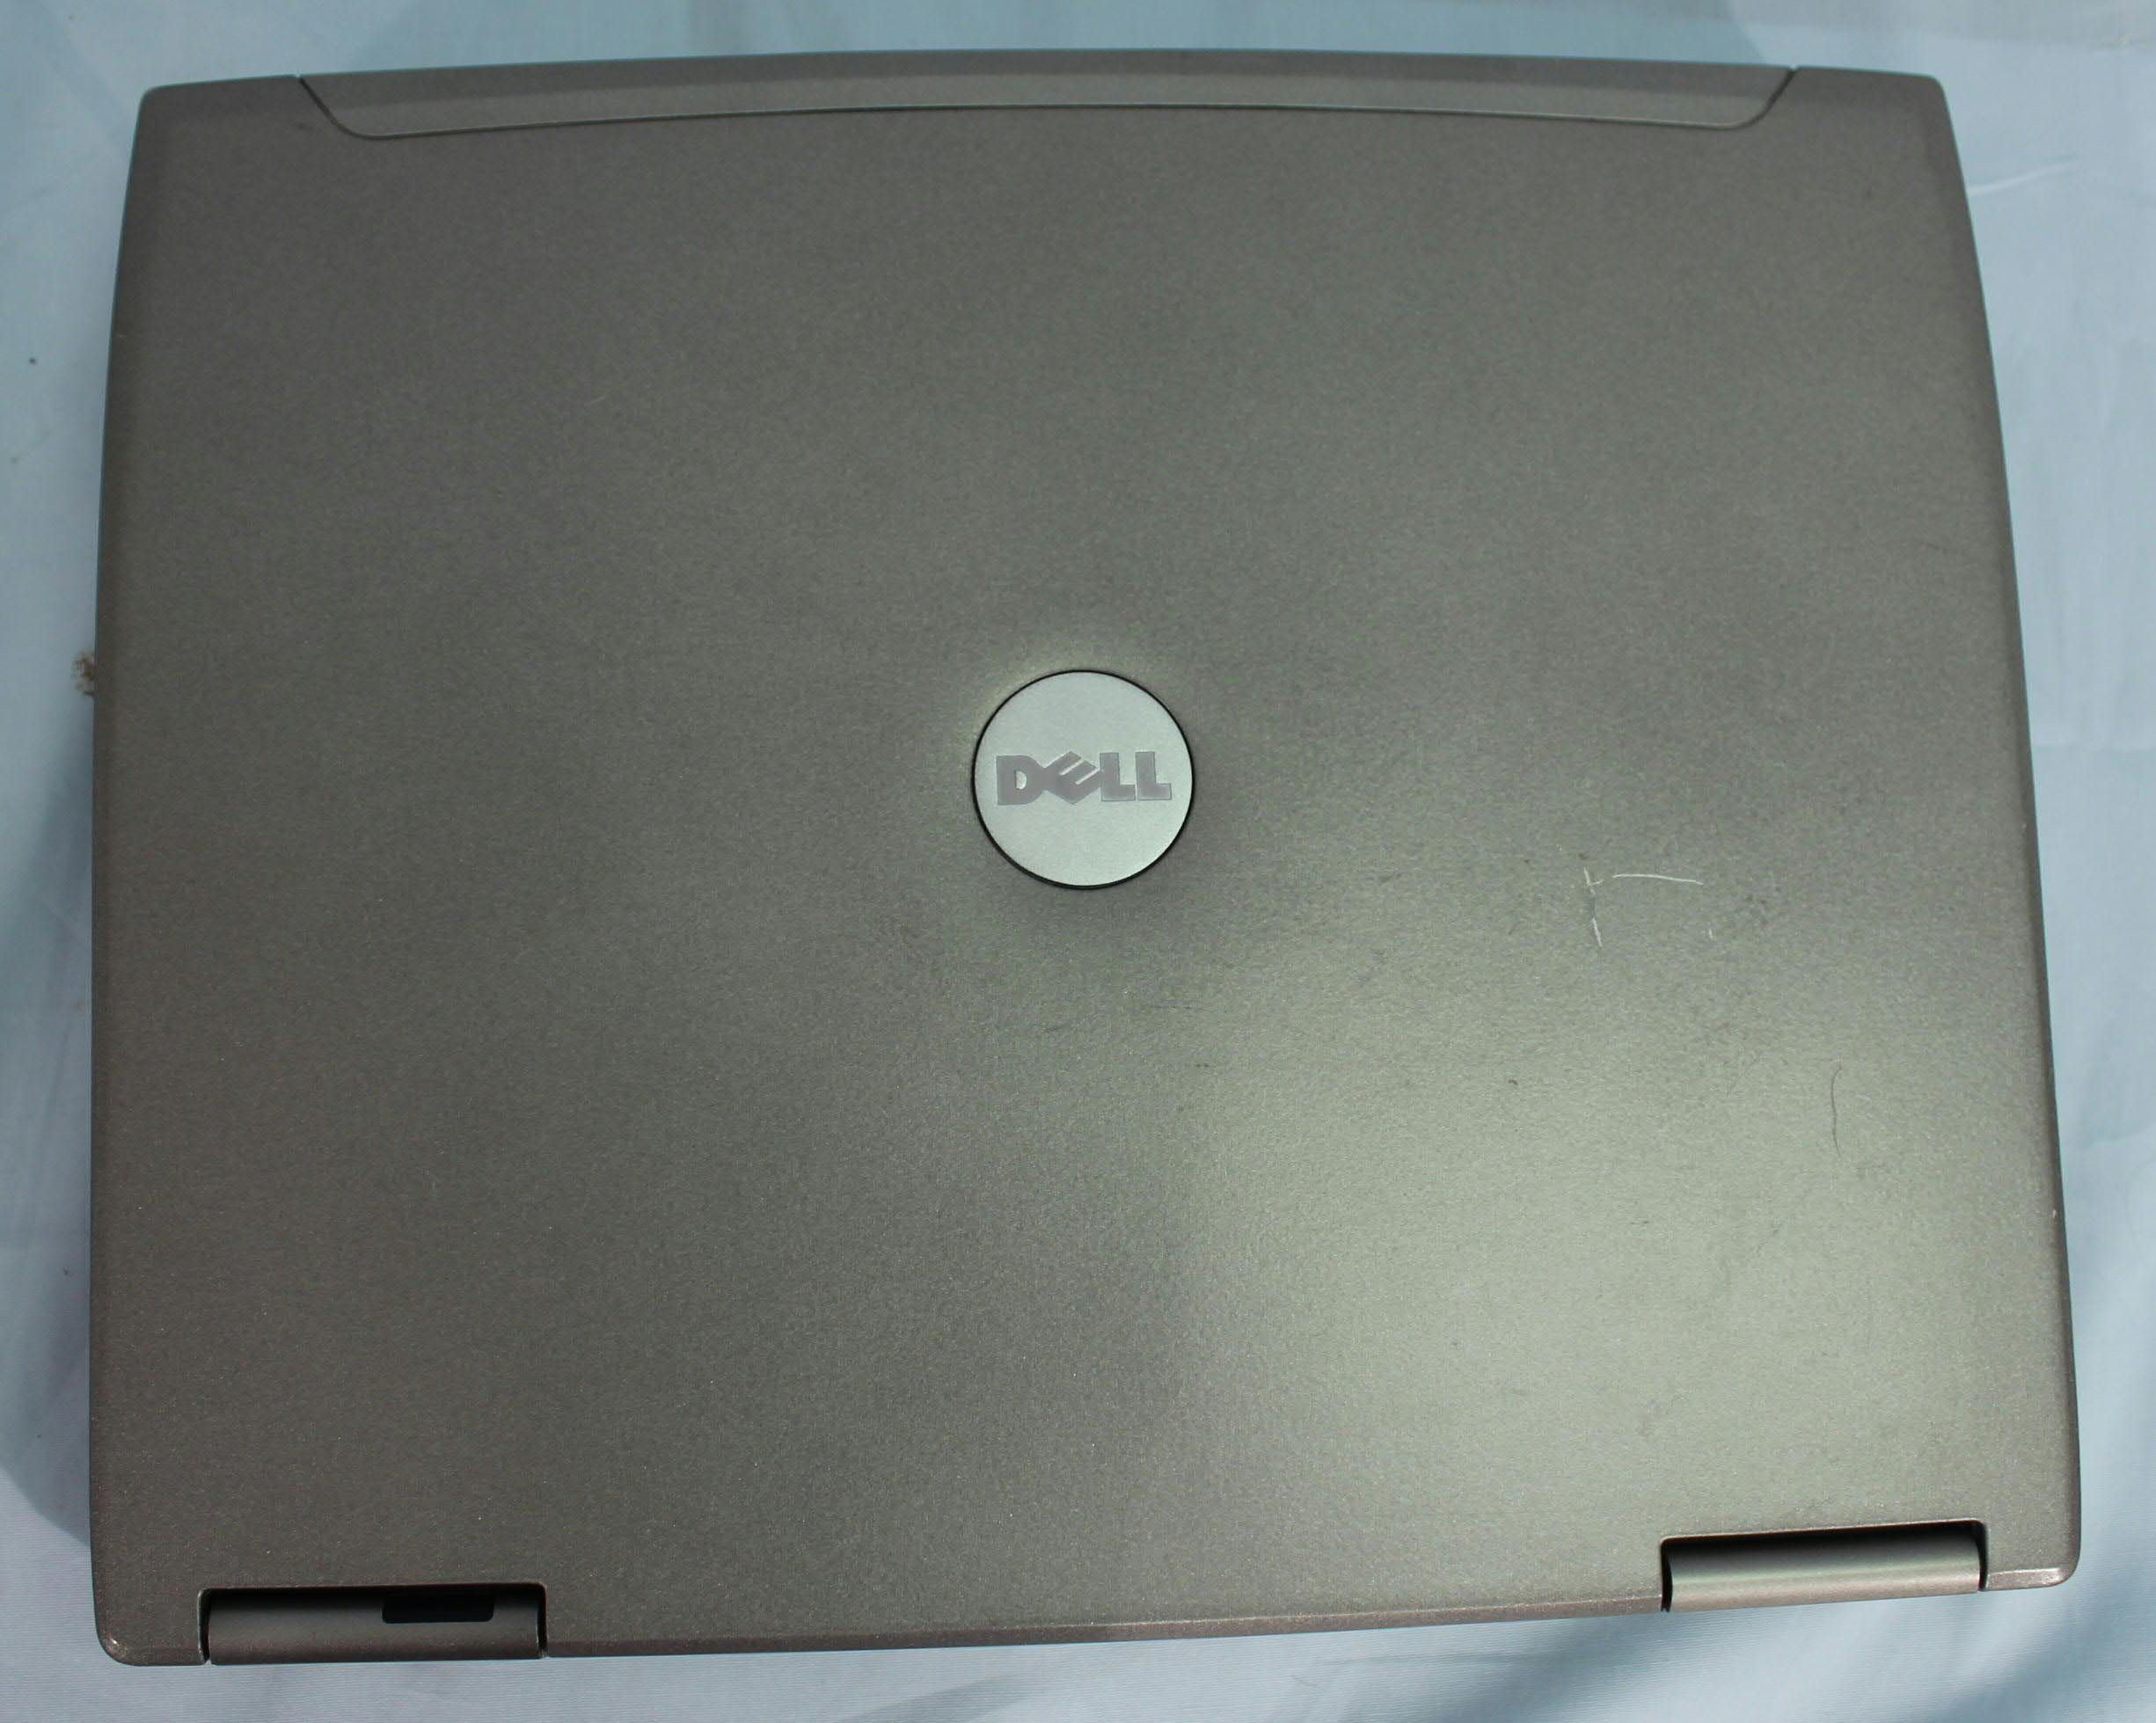 Dell Latitude D610 Pentium M 1 73GHz 1GB 60GB DVD Combo Wireless XP